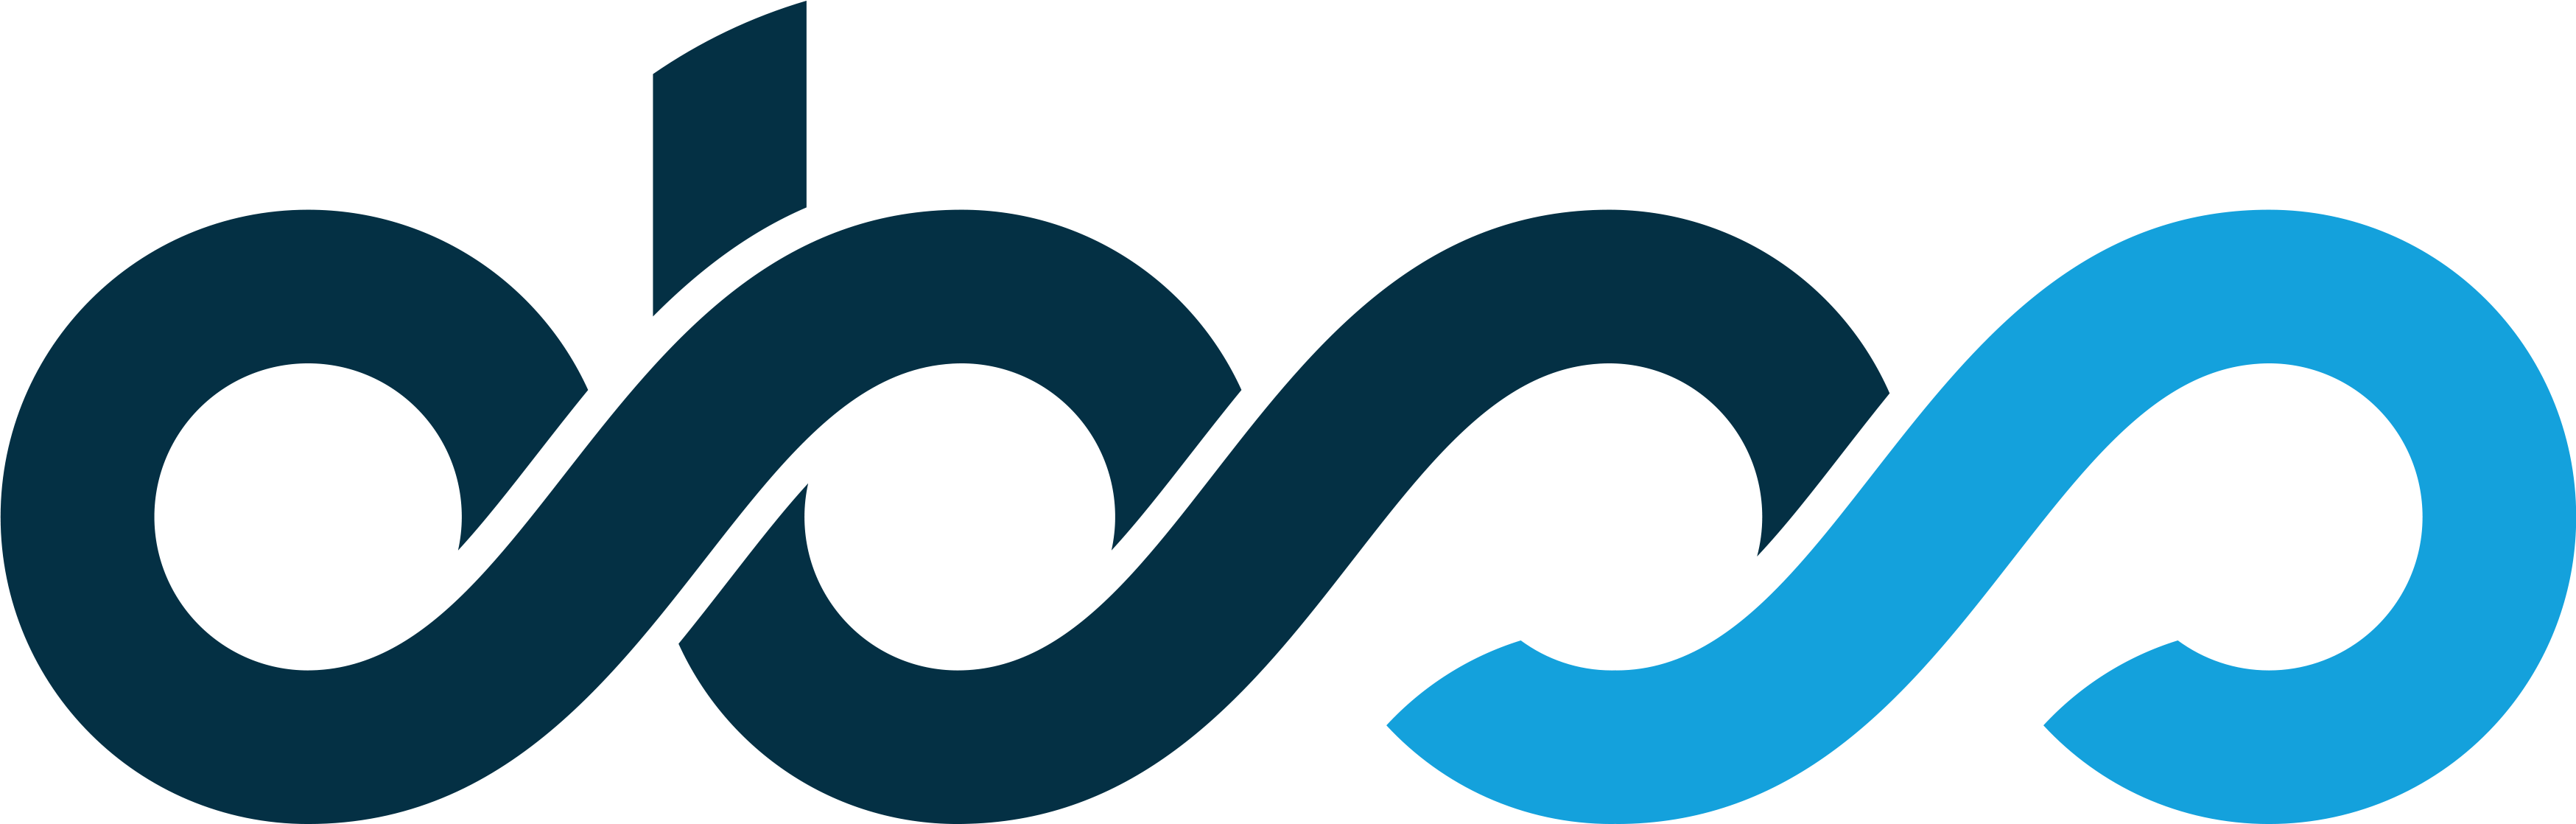 OBSS logo